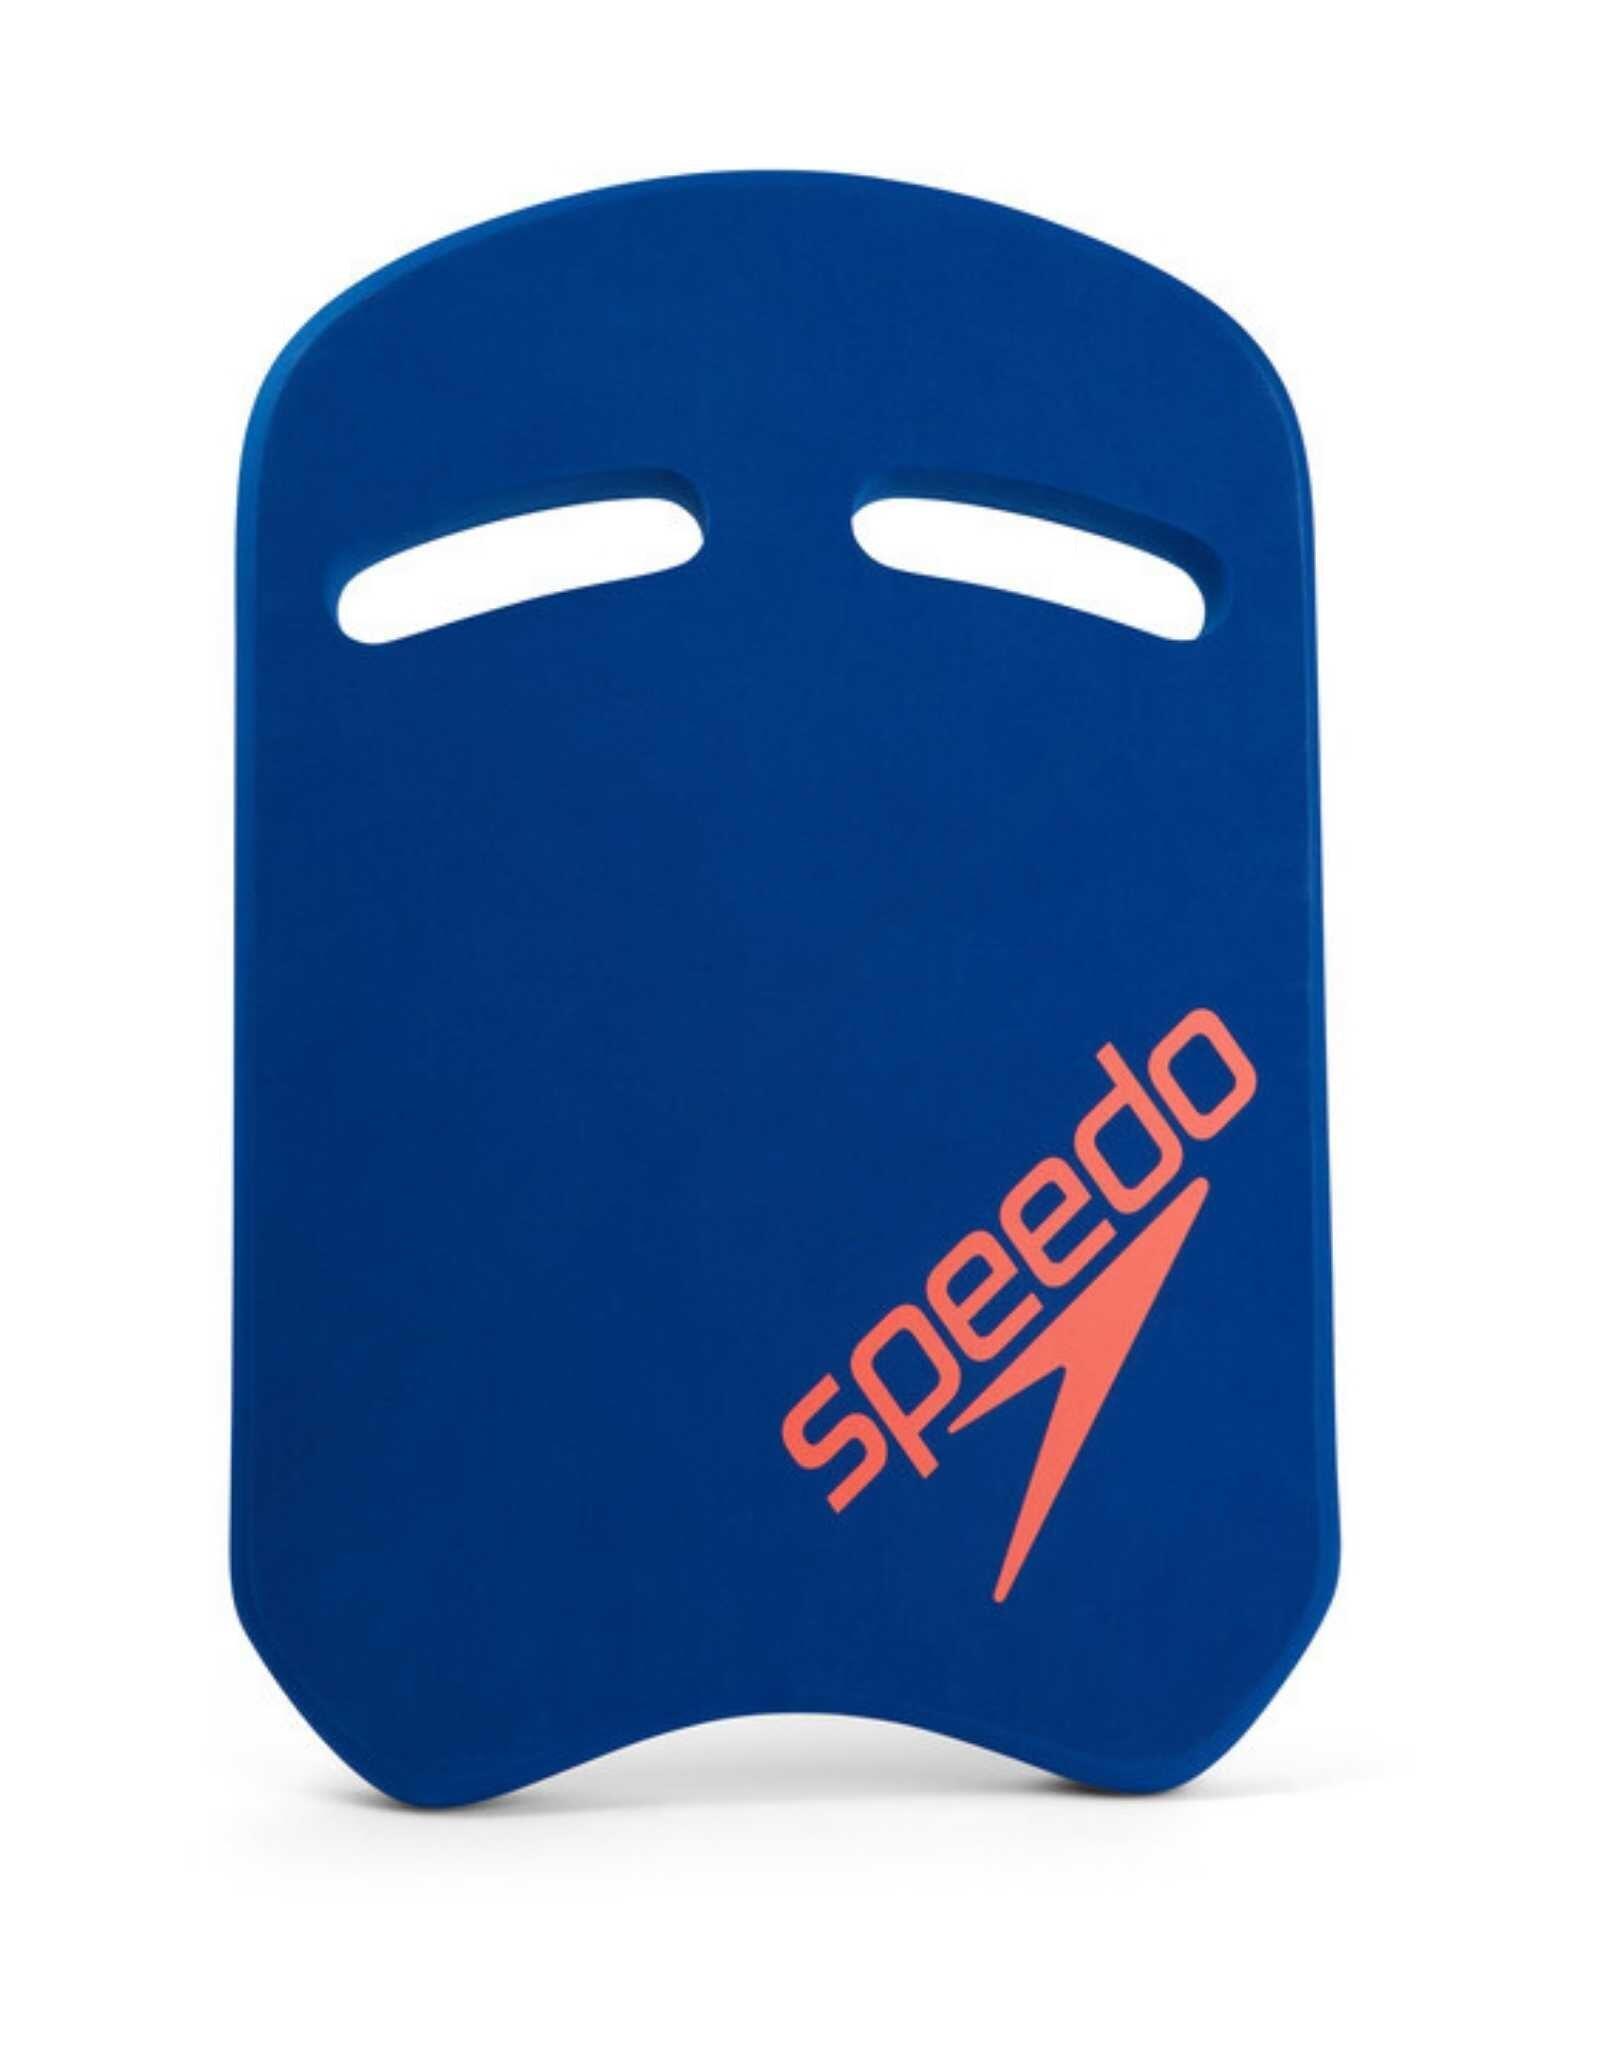 SPEEDO Speedo Kickboard - Blue / Orange